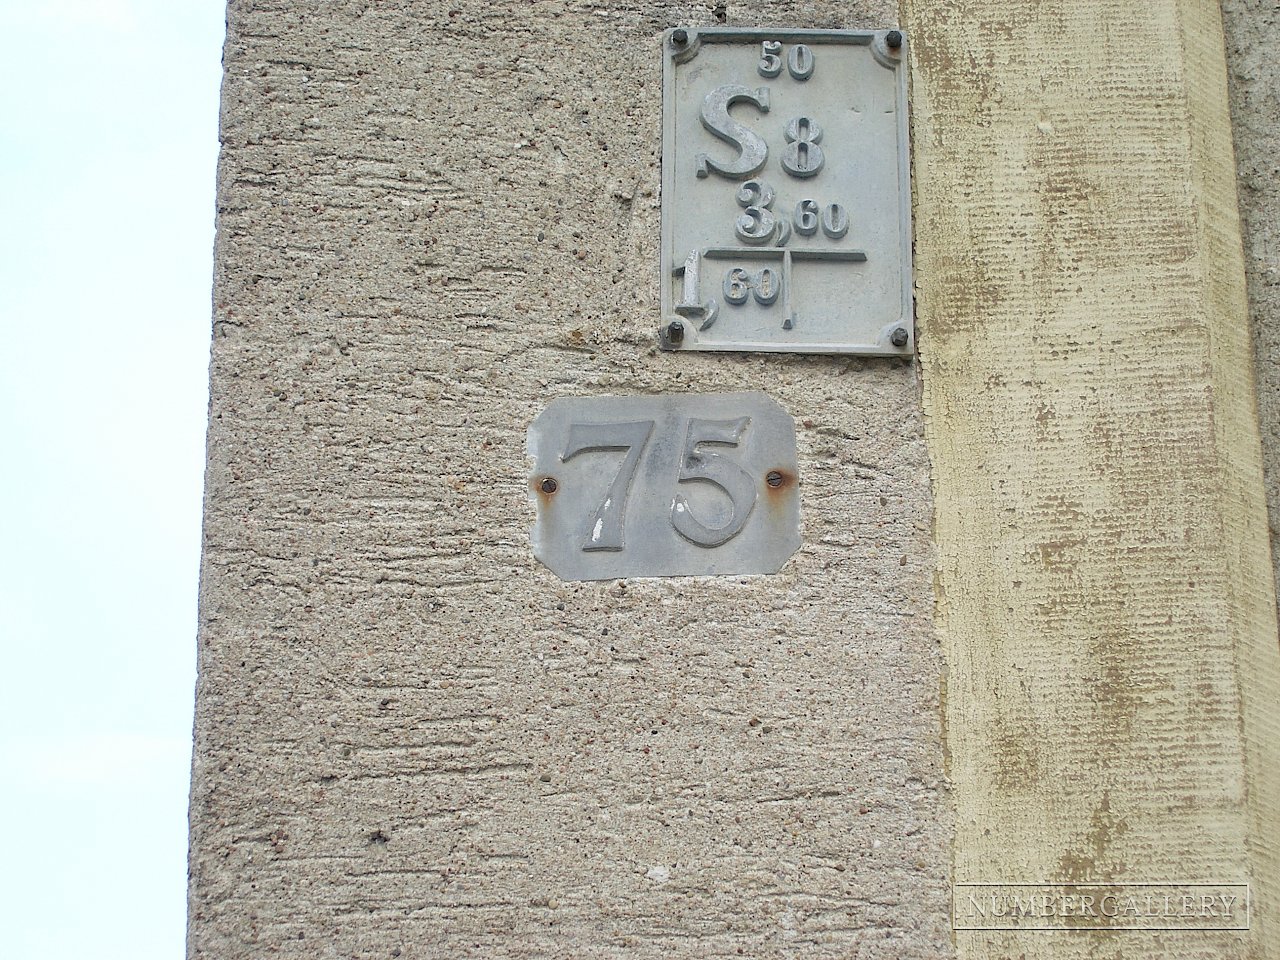 Hausnummer in Ladenburg